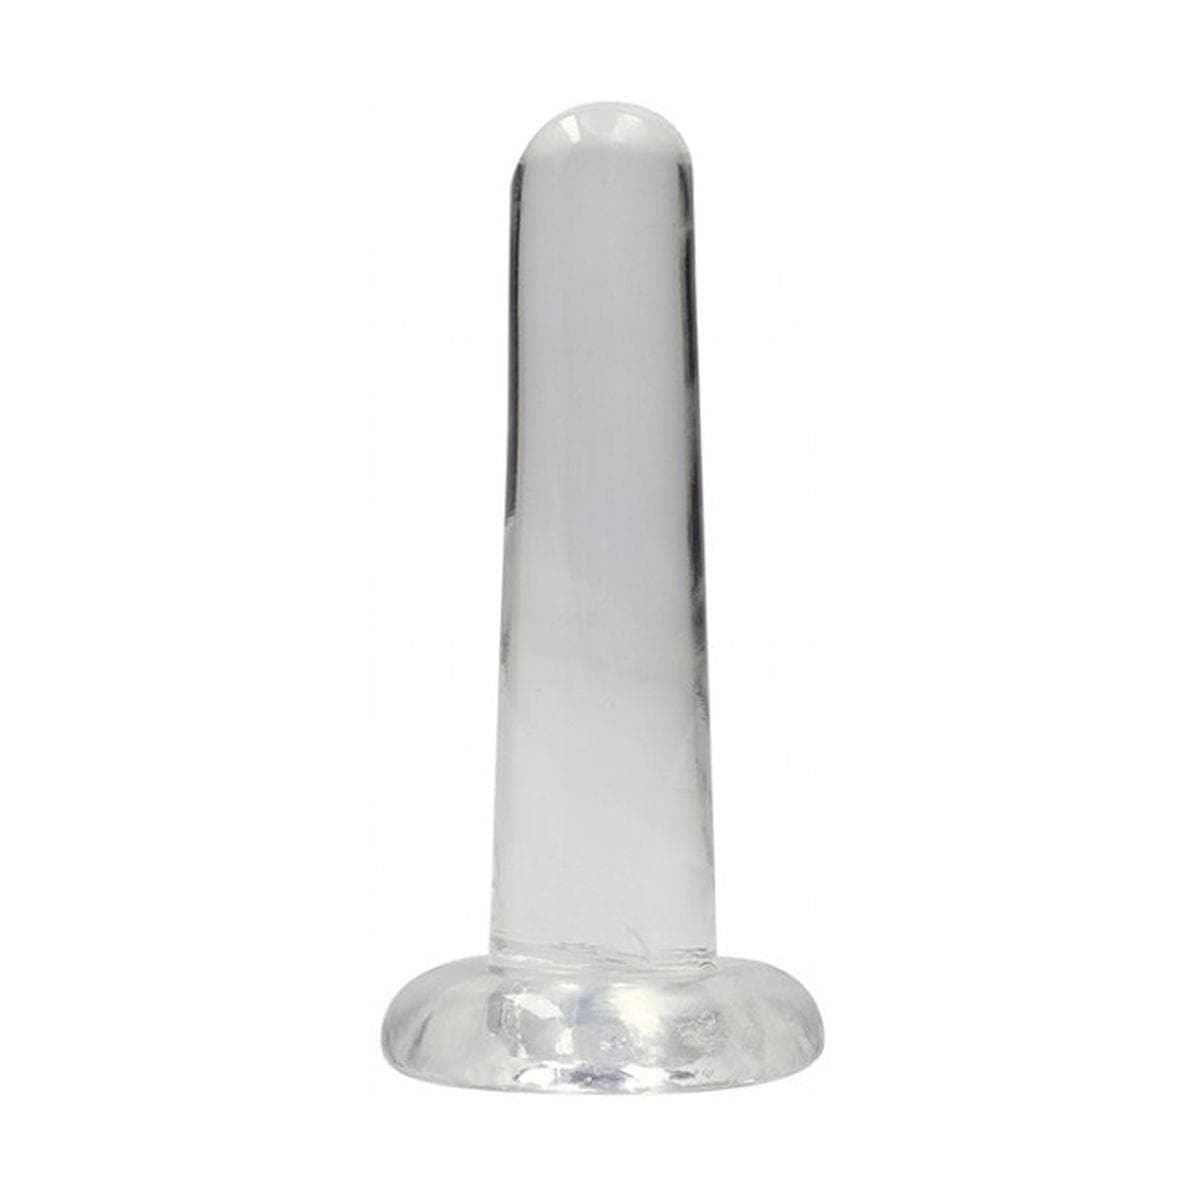 Dildo RealRock Liso Crystal Clear, 13.5cm Ø3cm  Perola Sexshop Almada Transparente  